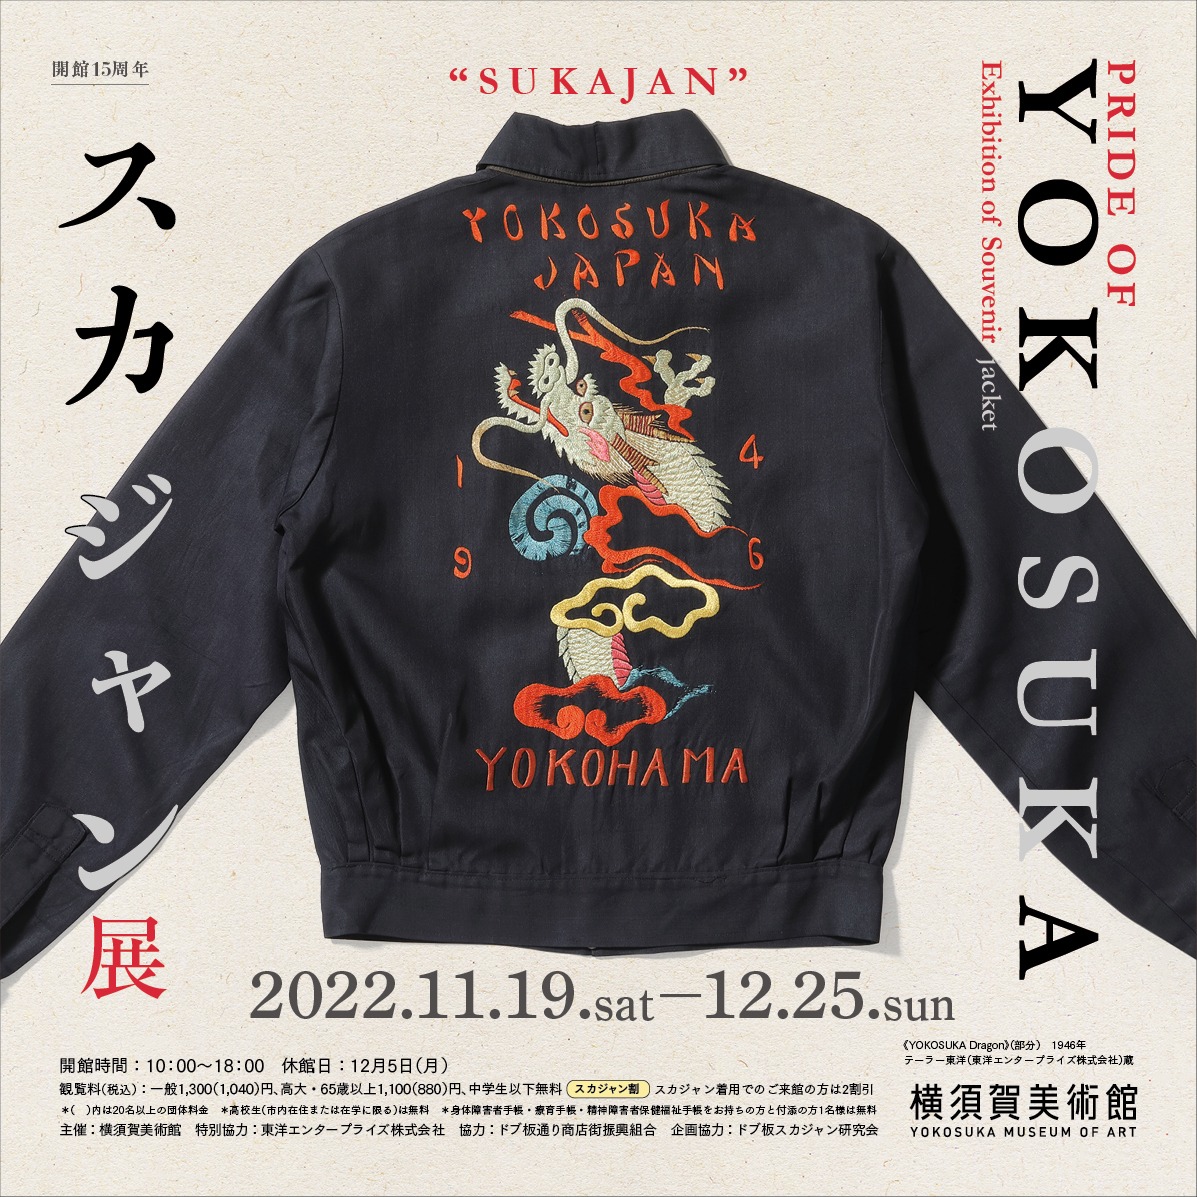 Exhibition of Souvenir Jacket "Sukajyan"